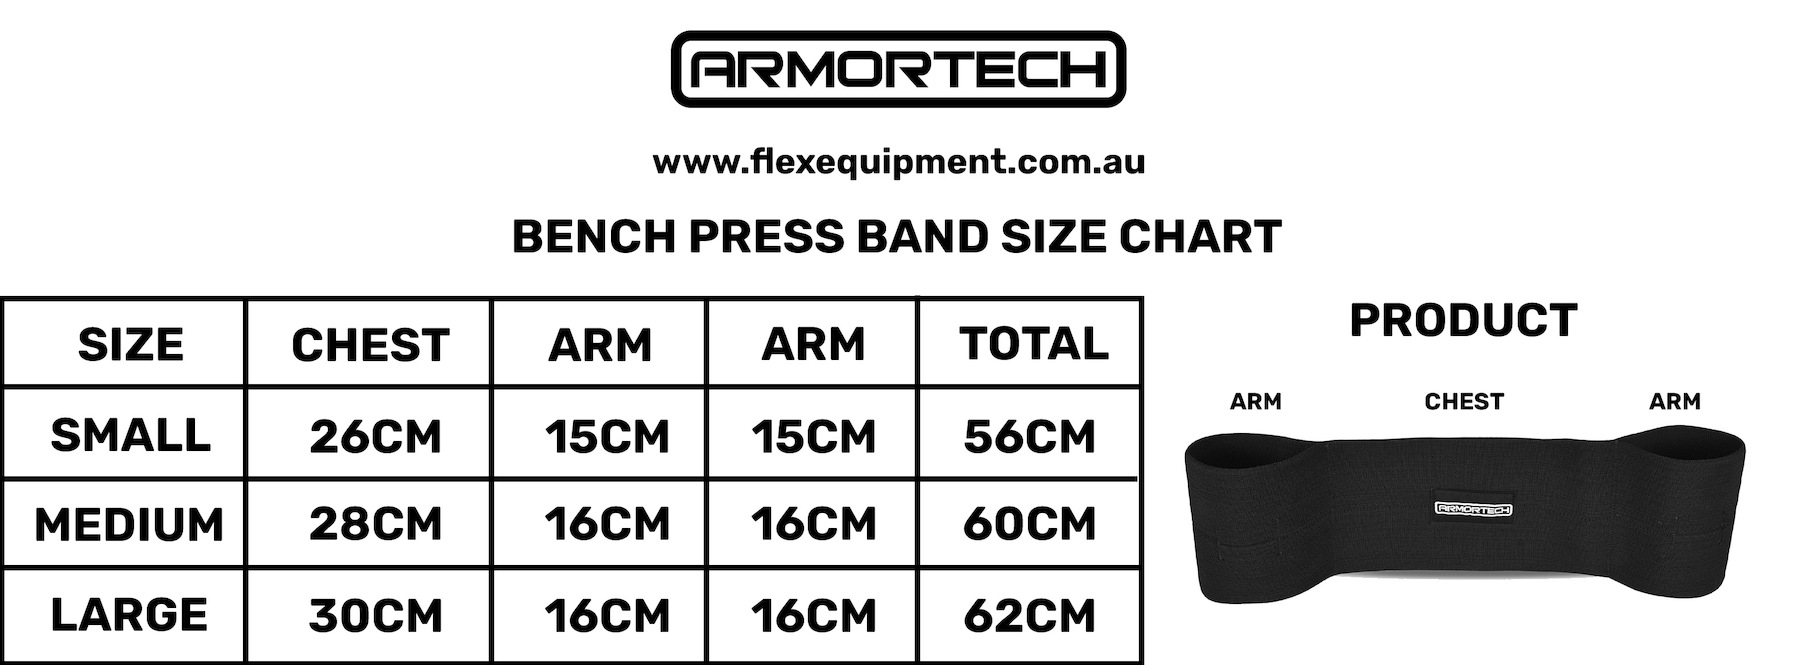 Armortech V2 Elastic Bench Press Band [SIZE: Small]